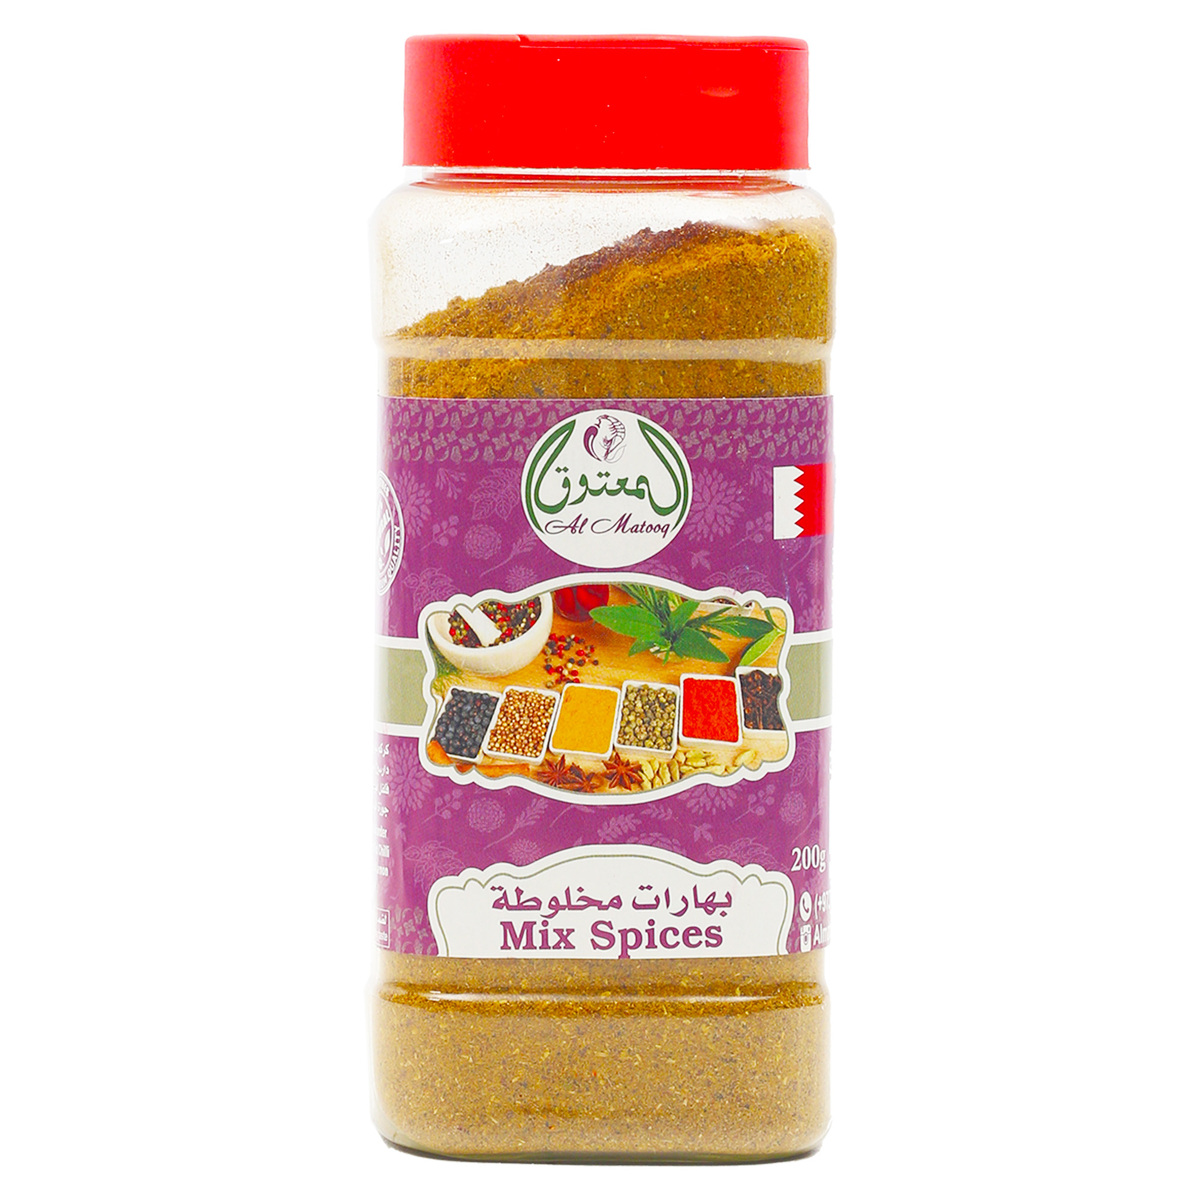 Al Matooq Mix Spices 200 g